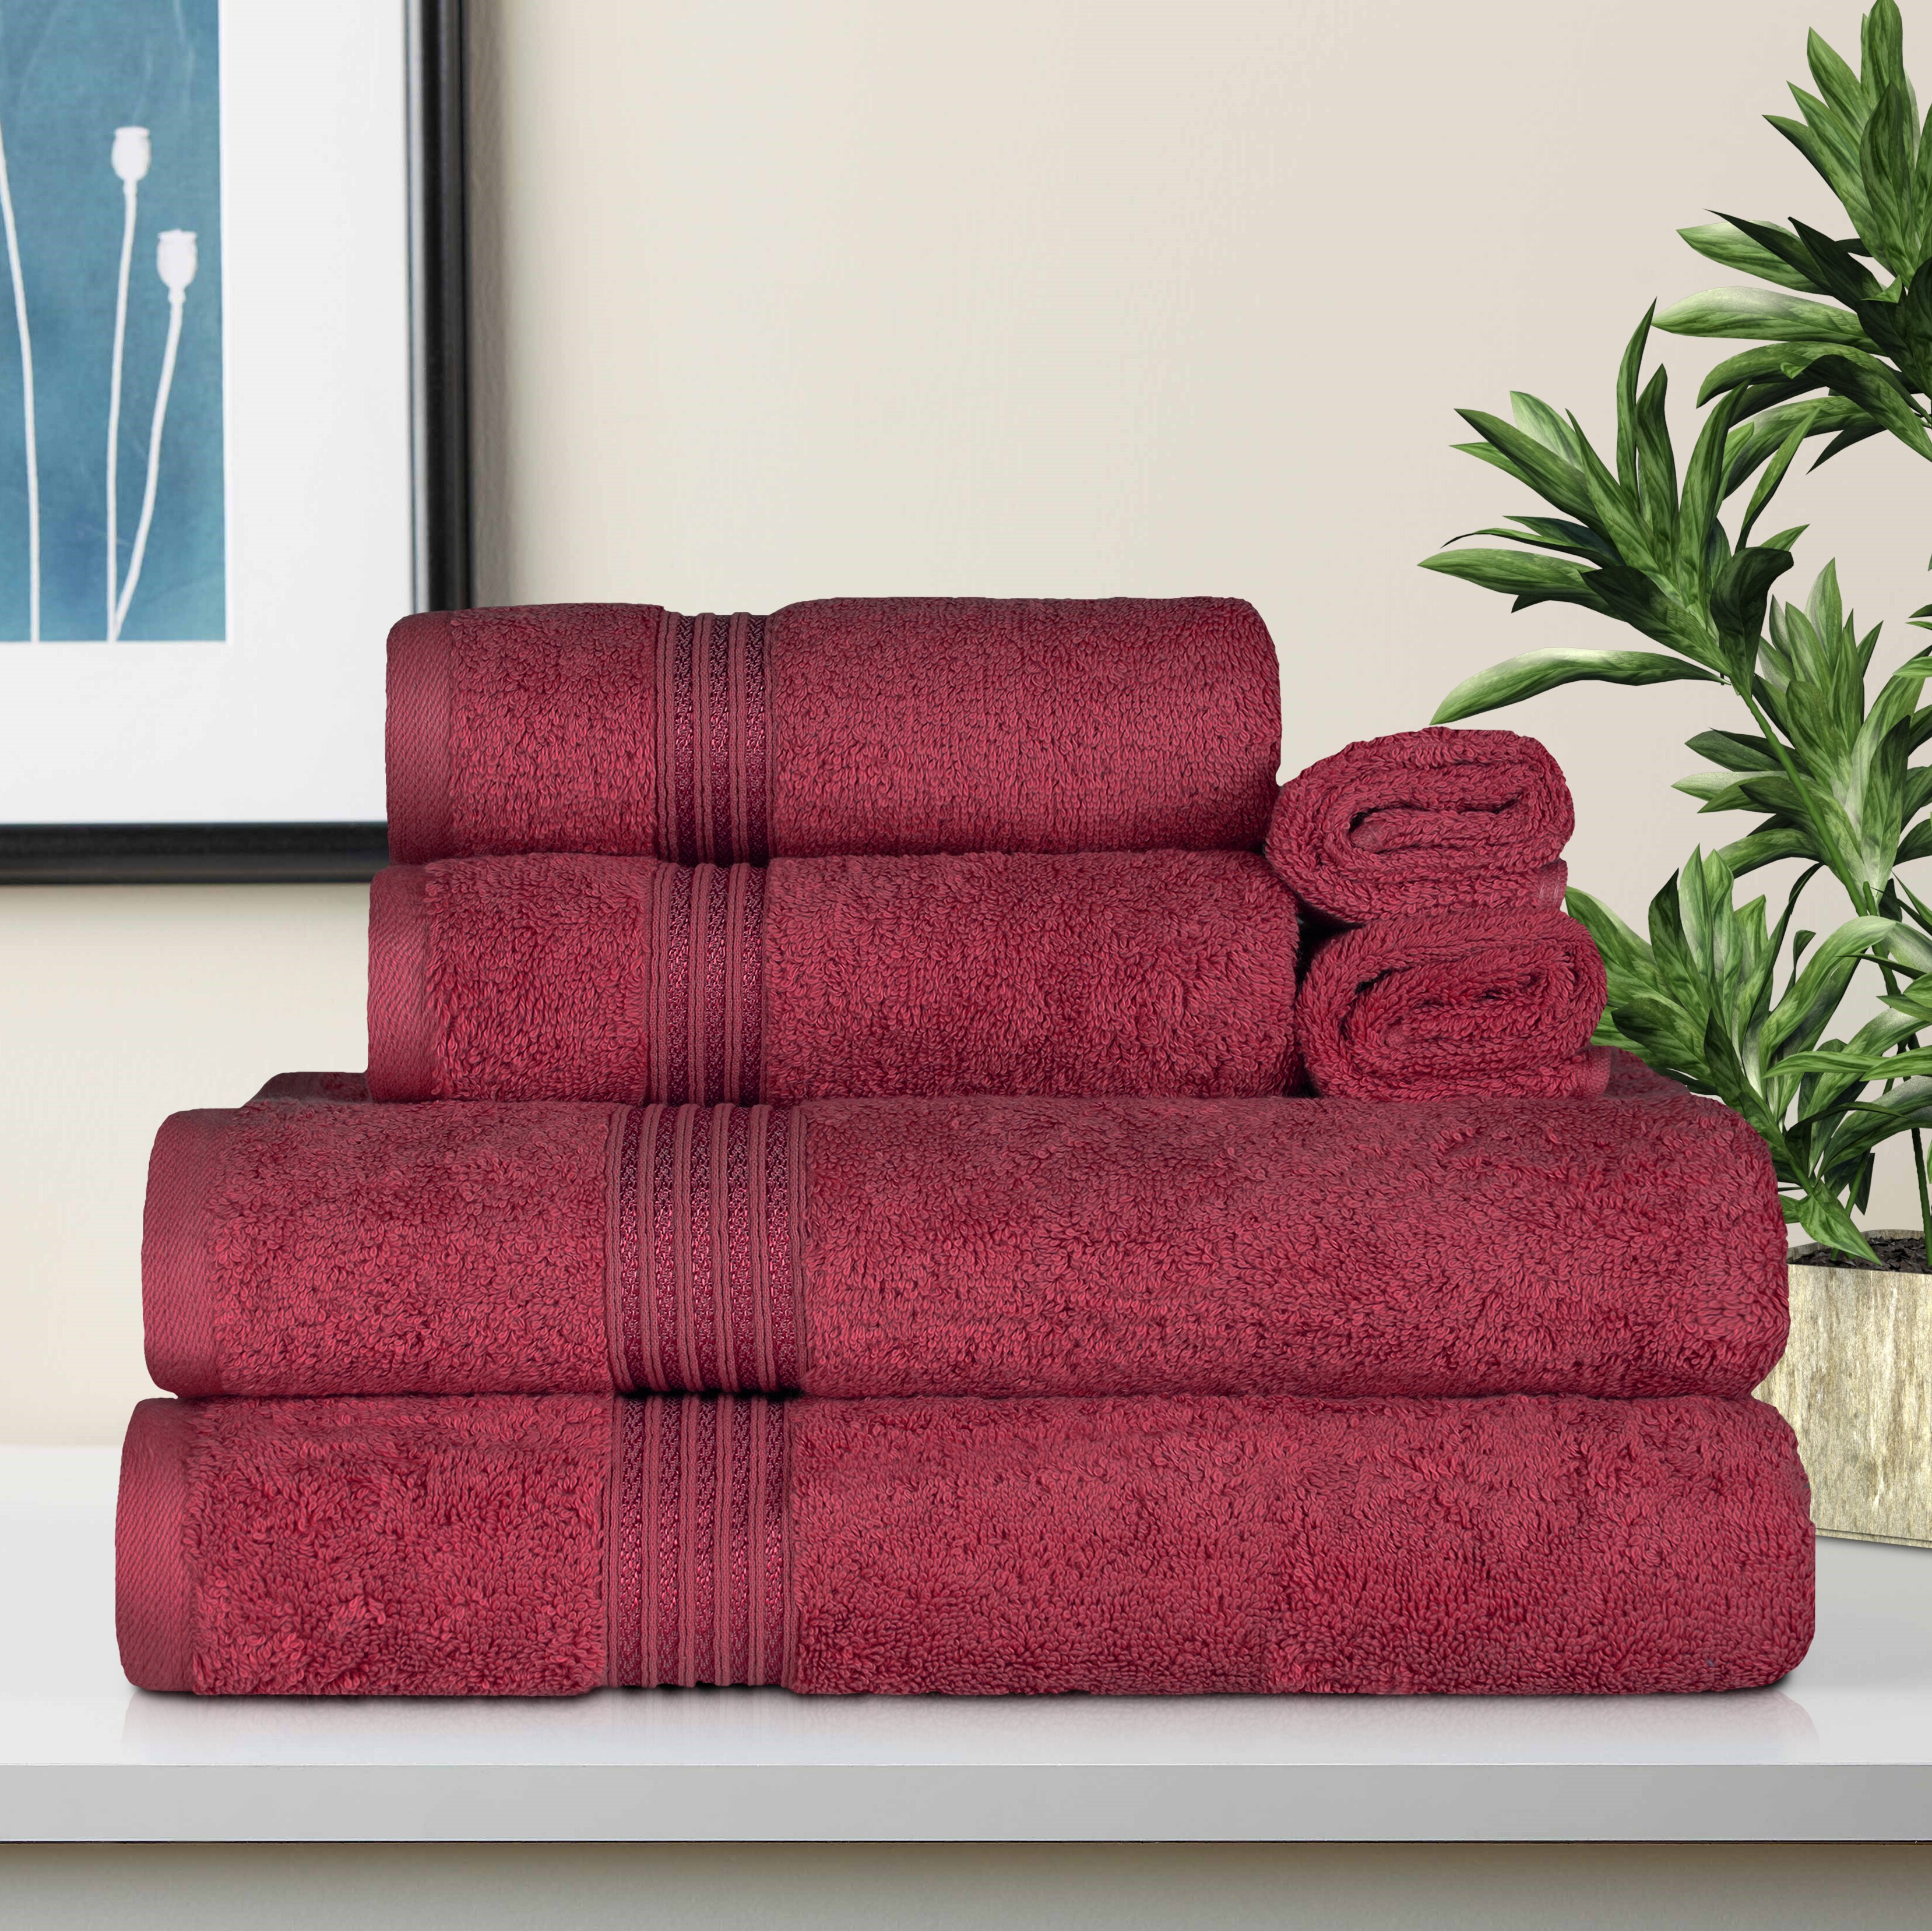 Eco Towels Premium Hotel & Spa Bath Towel Cotton, 30 inch x 56 inch,Set of 4 (Burgundy), Red